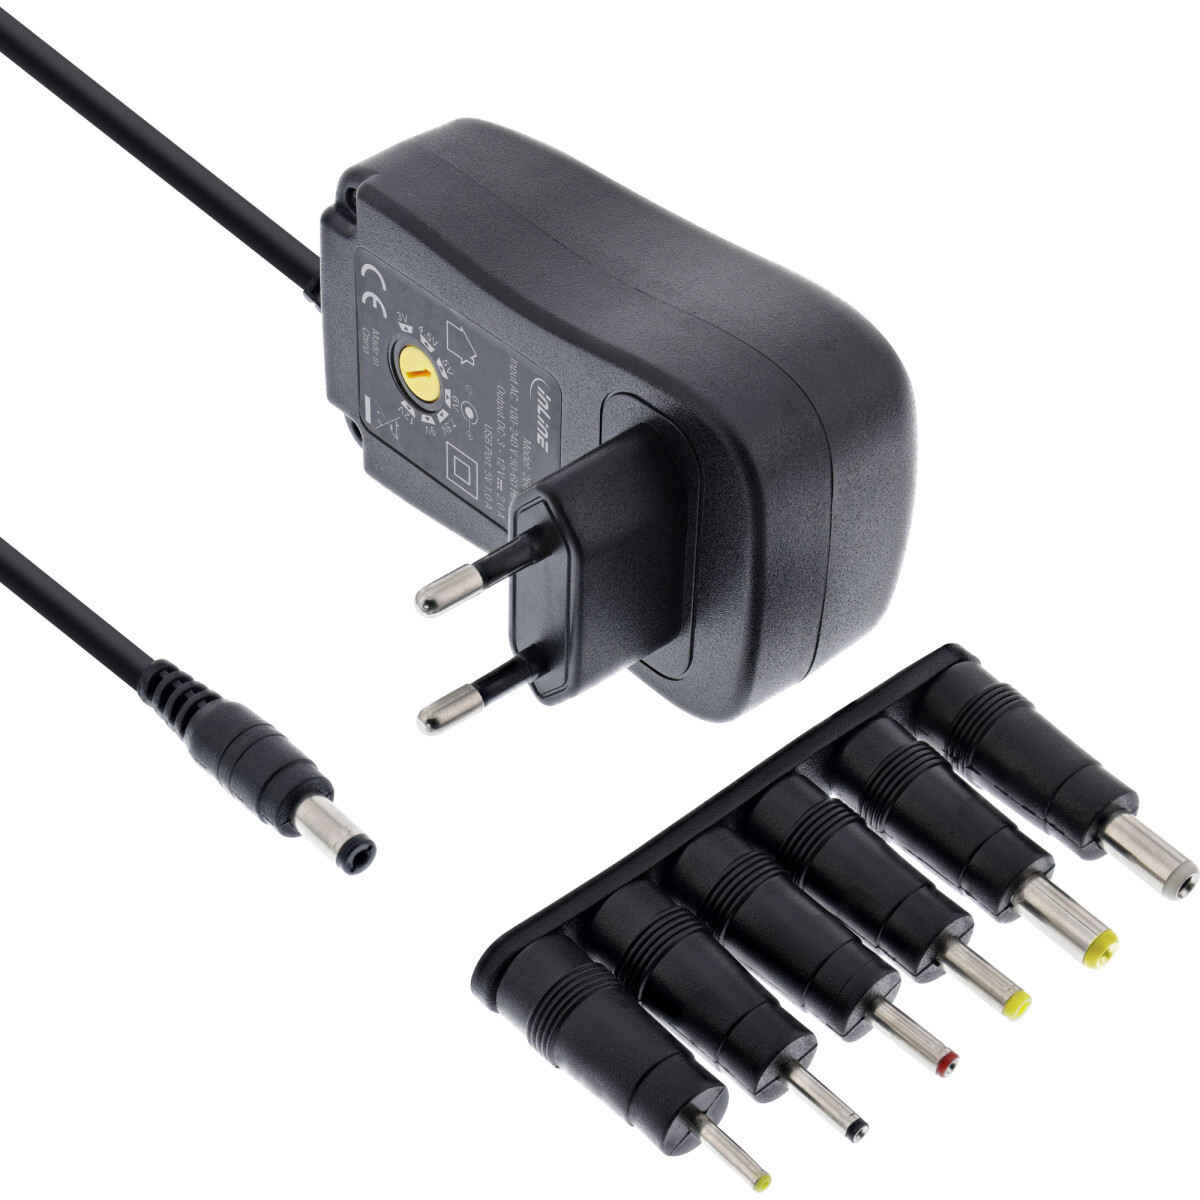 InLine® Universal power supply 30W with USB, 110-240V...